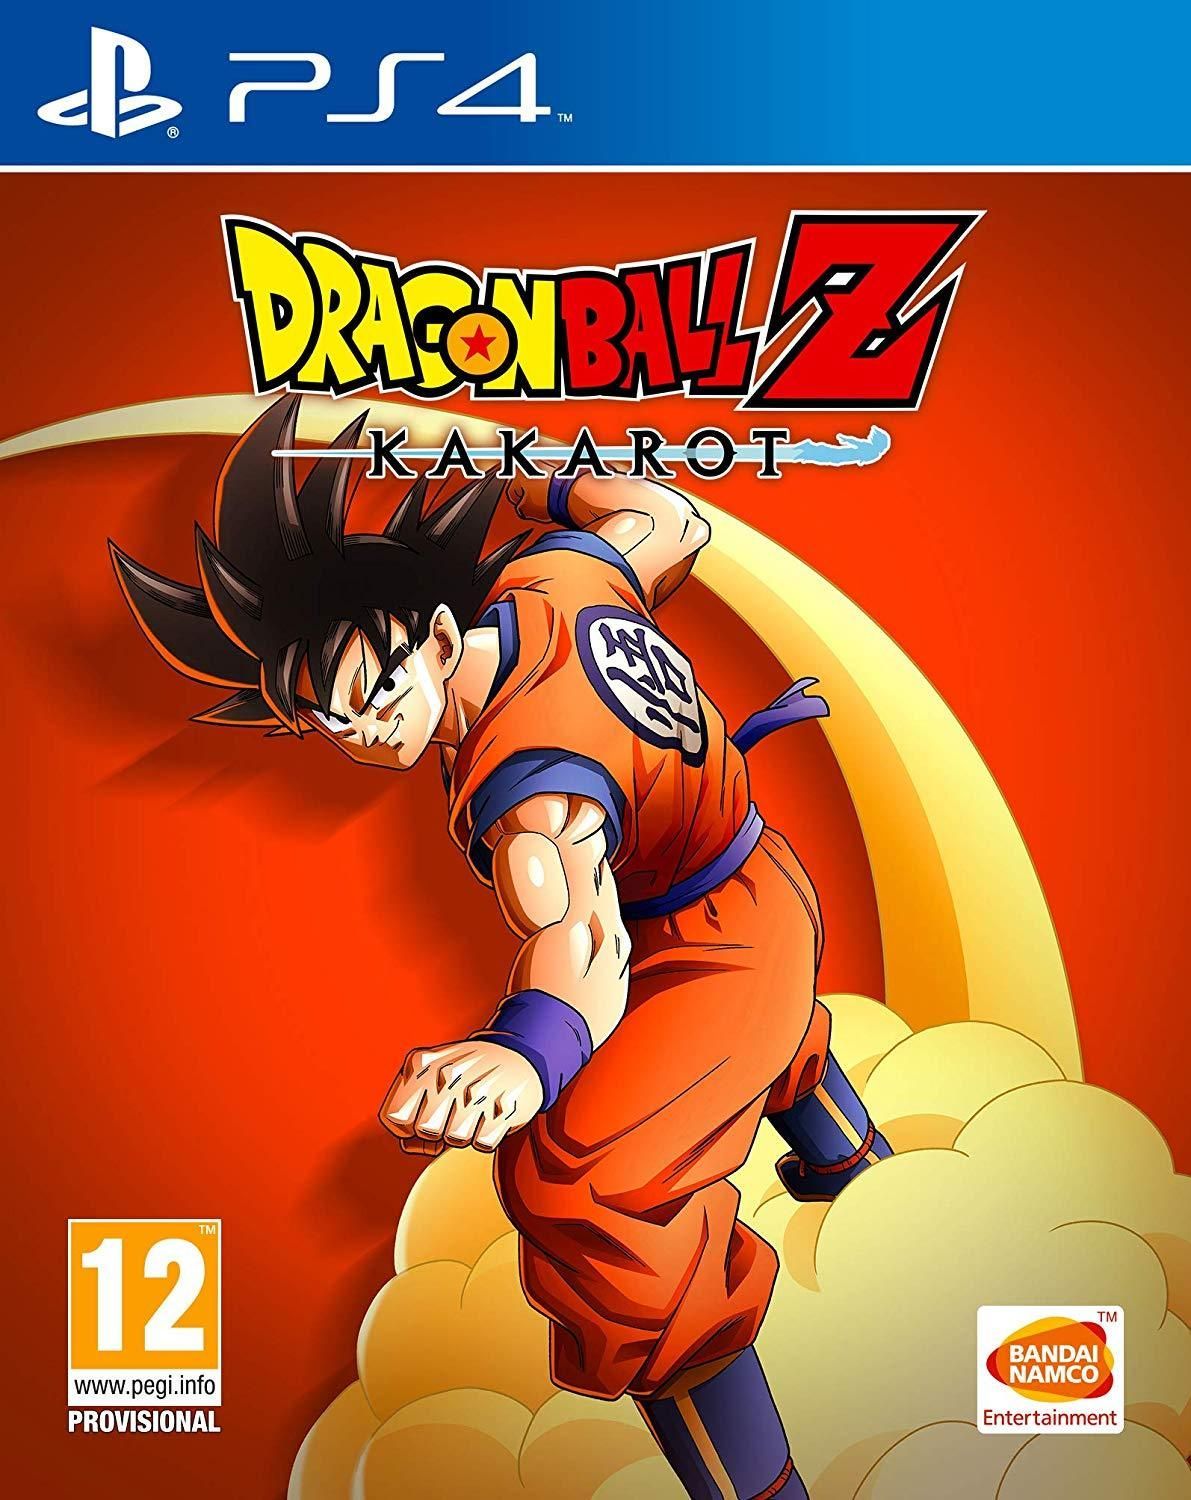 Dragon Ball Z: Kakarot - Videojuego (PS4, PC, One, Switch, PS5 y Series X/S) - Vandal